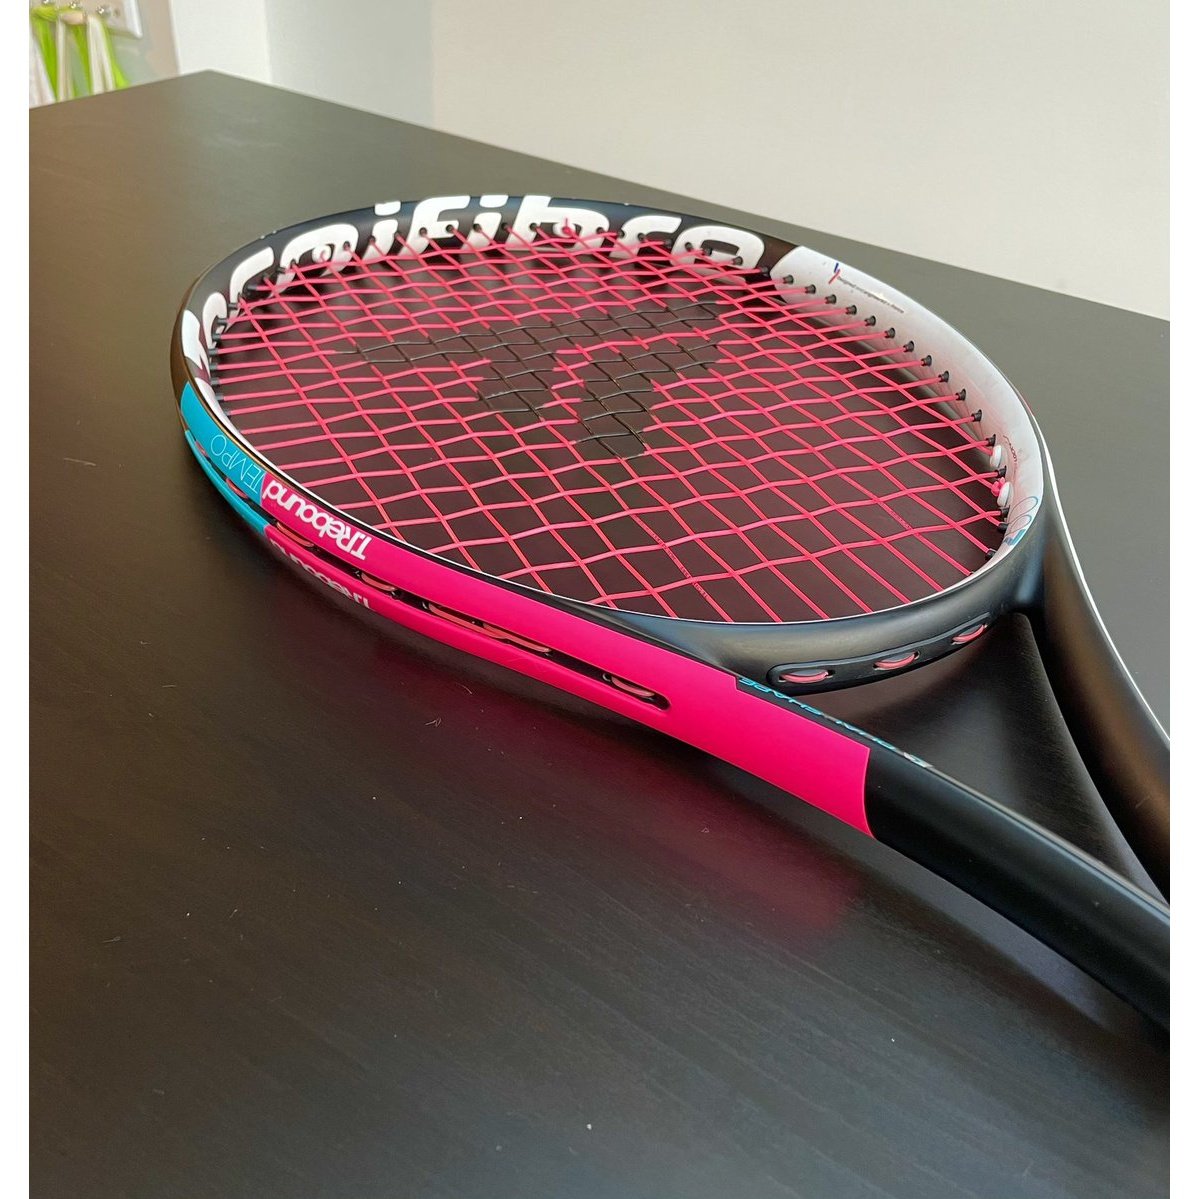 TAAN Tennis Racket String Reel 200m Gauge 1.20mm Racquet Strings Reel  Accessories Poly Polyester Hard Wire - AliExpress